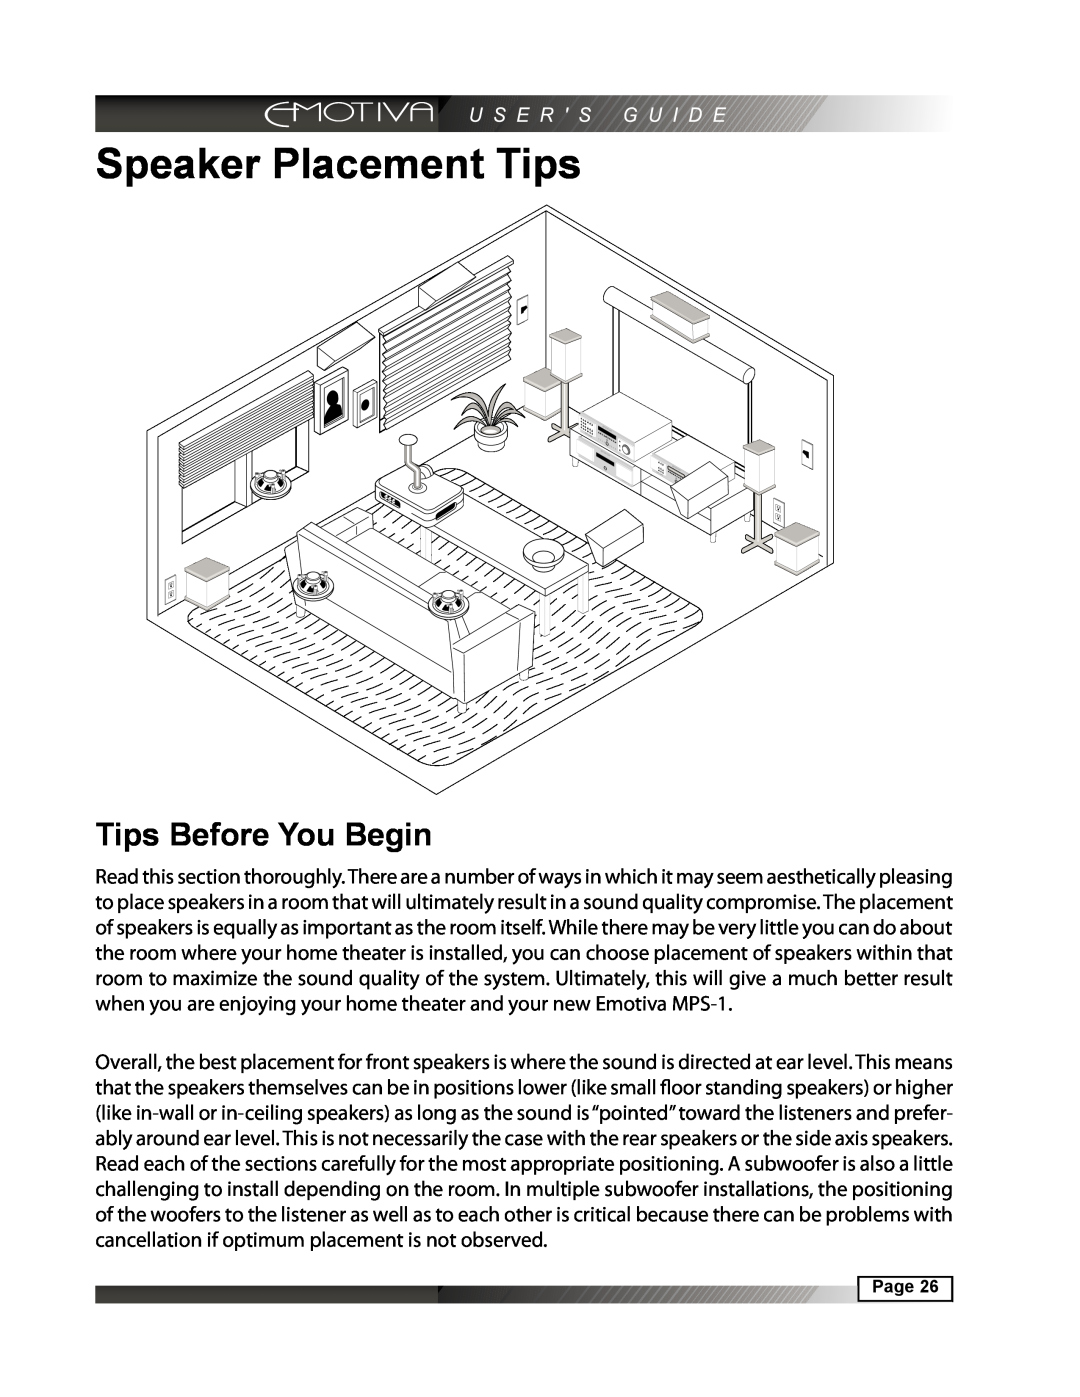 Emotiva MPS-1 manual Speaker Placement Tips, Tips Before You Begin 